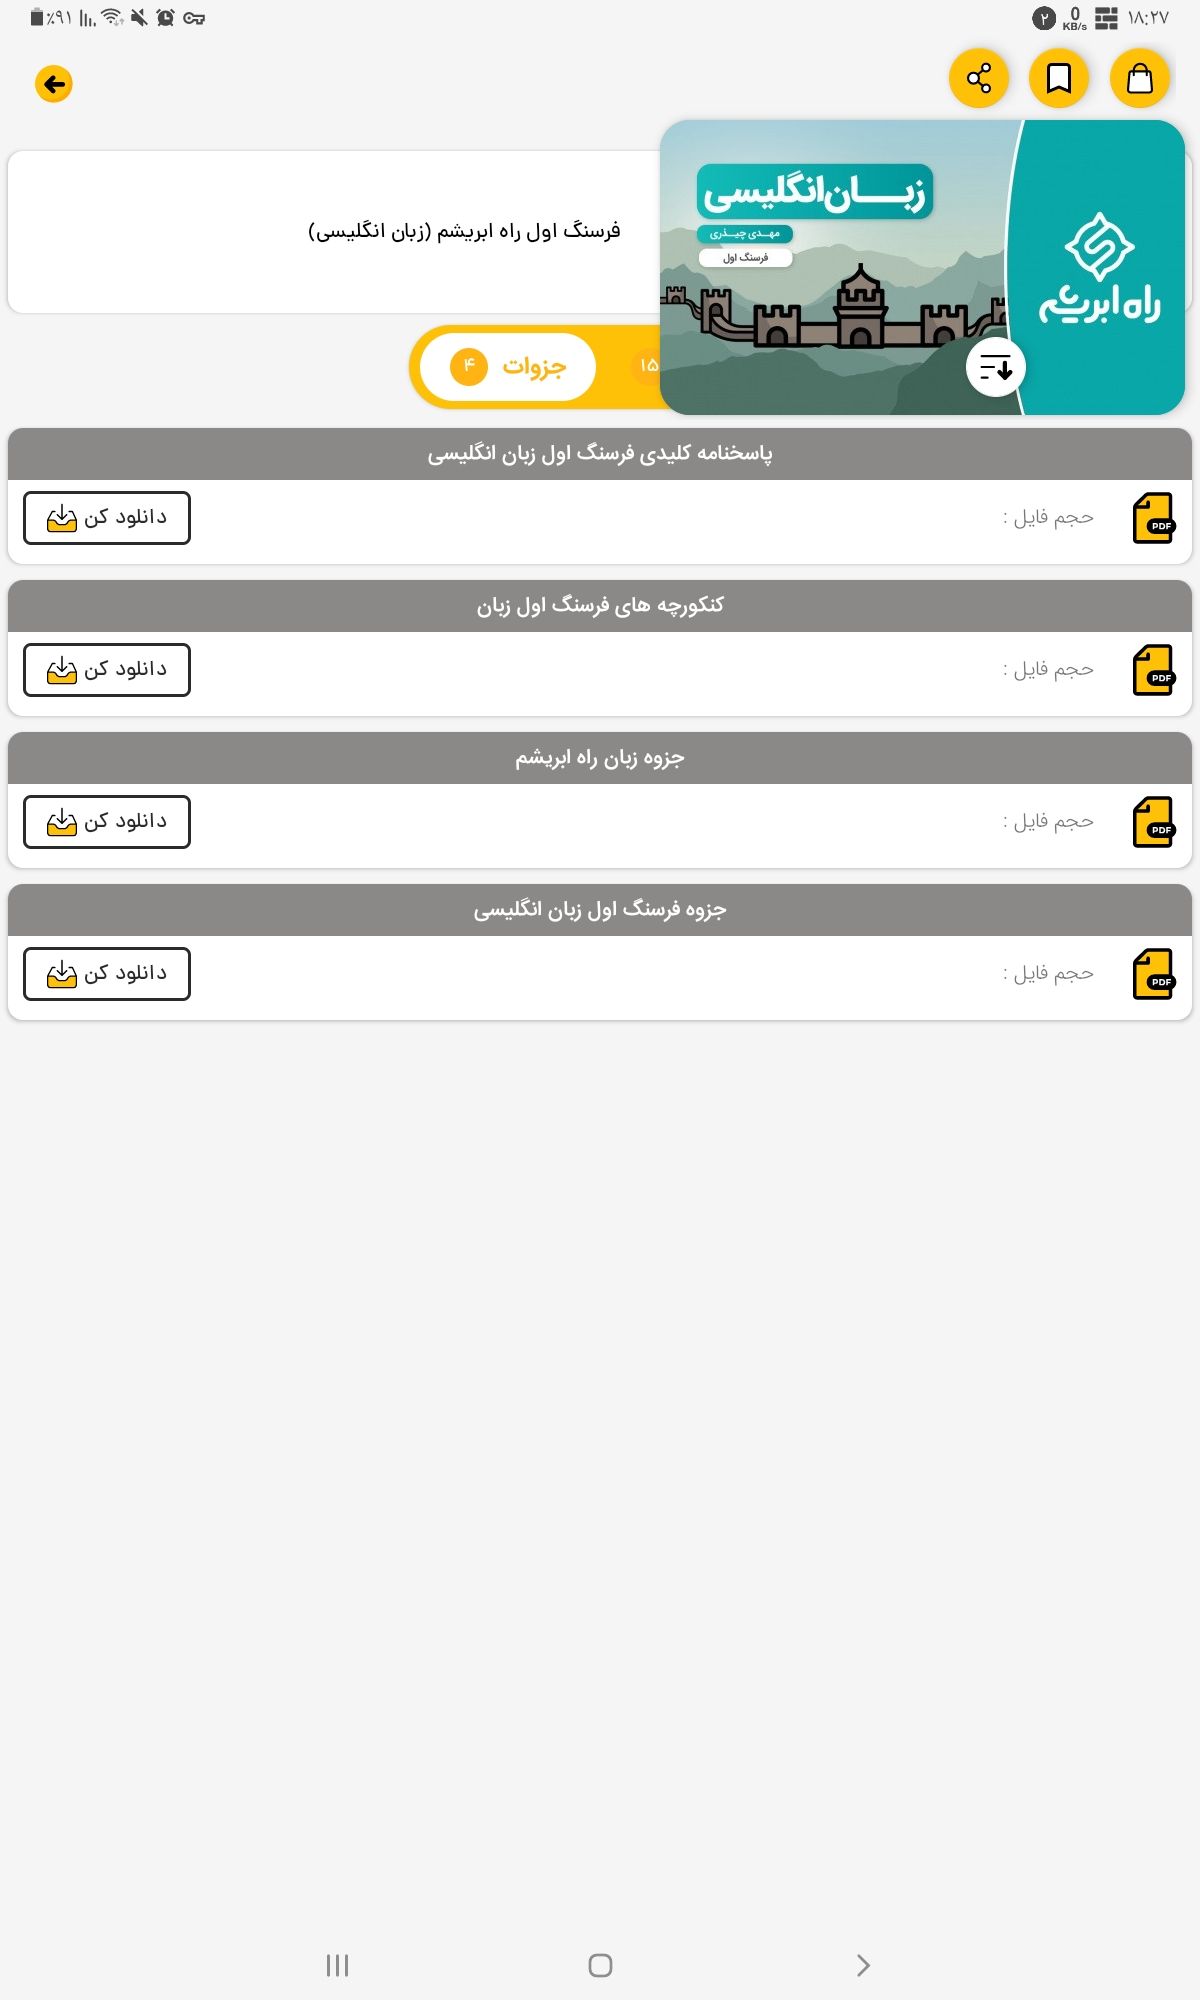 Screenshot_۲۰۲۱۱۲۲۳-۱۸۲۷۱۴_AlaaTV.jpg